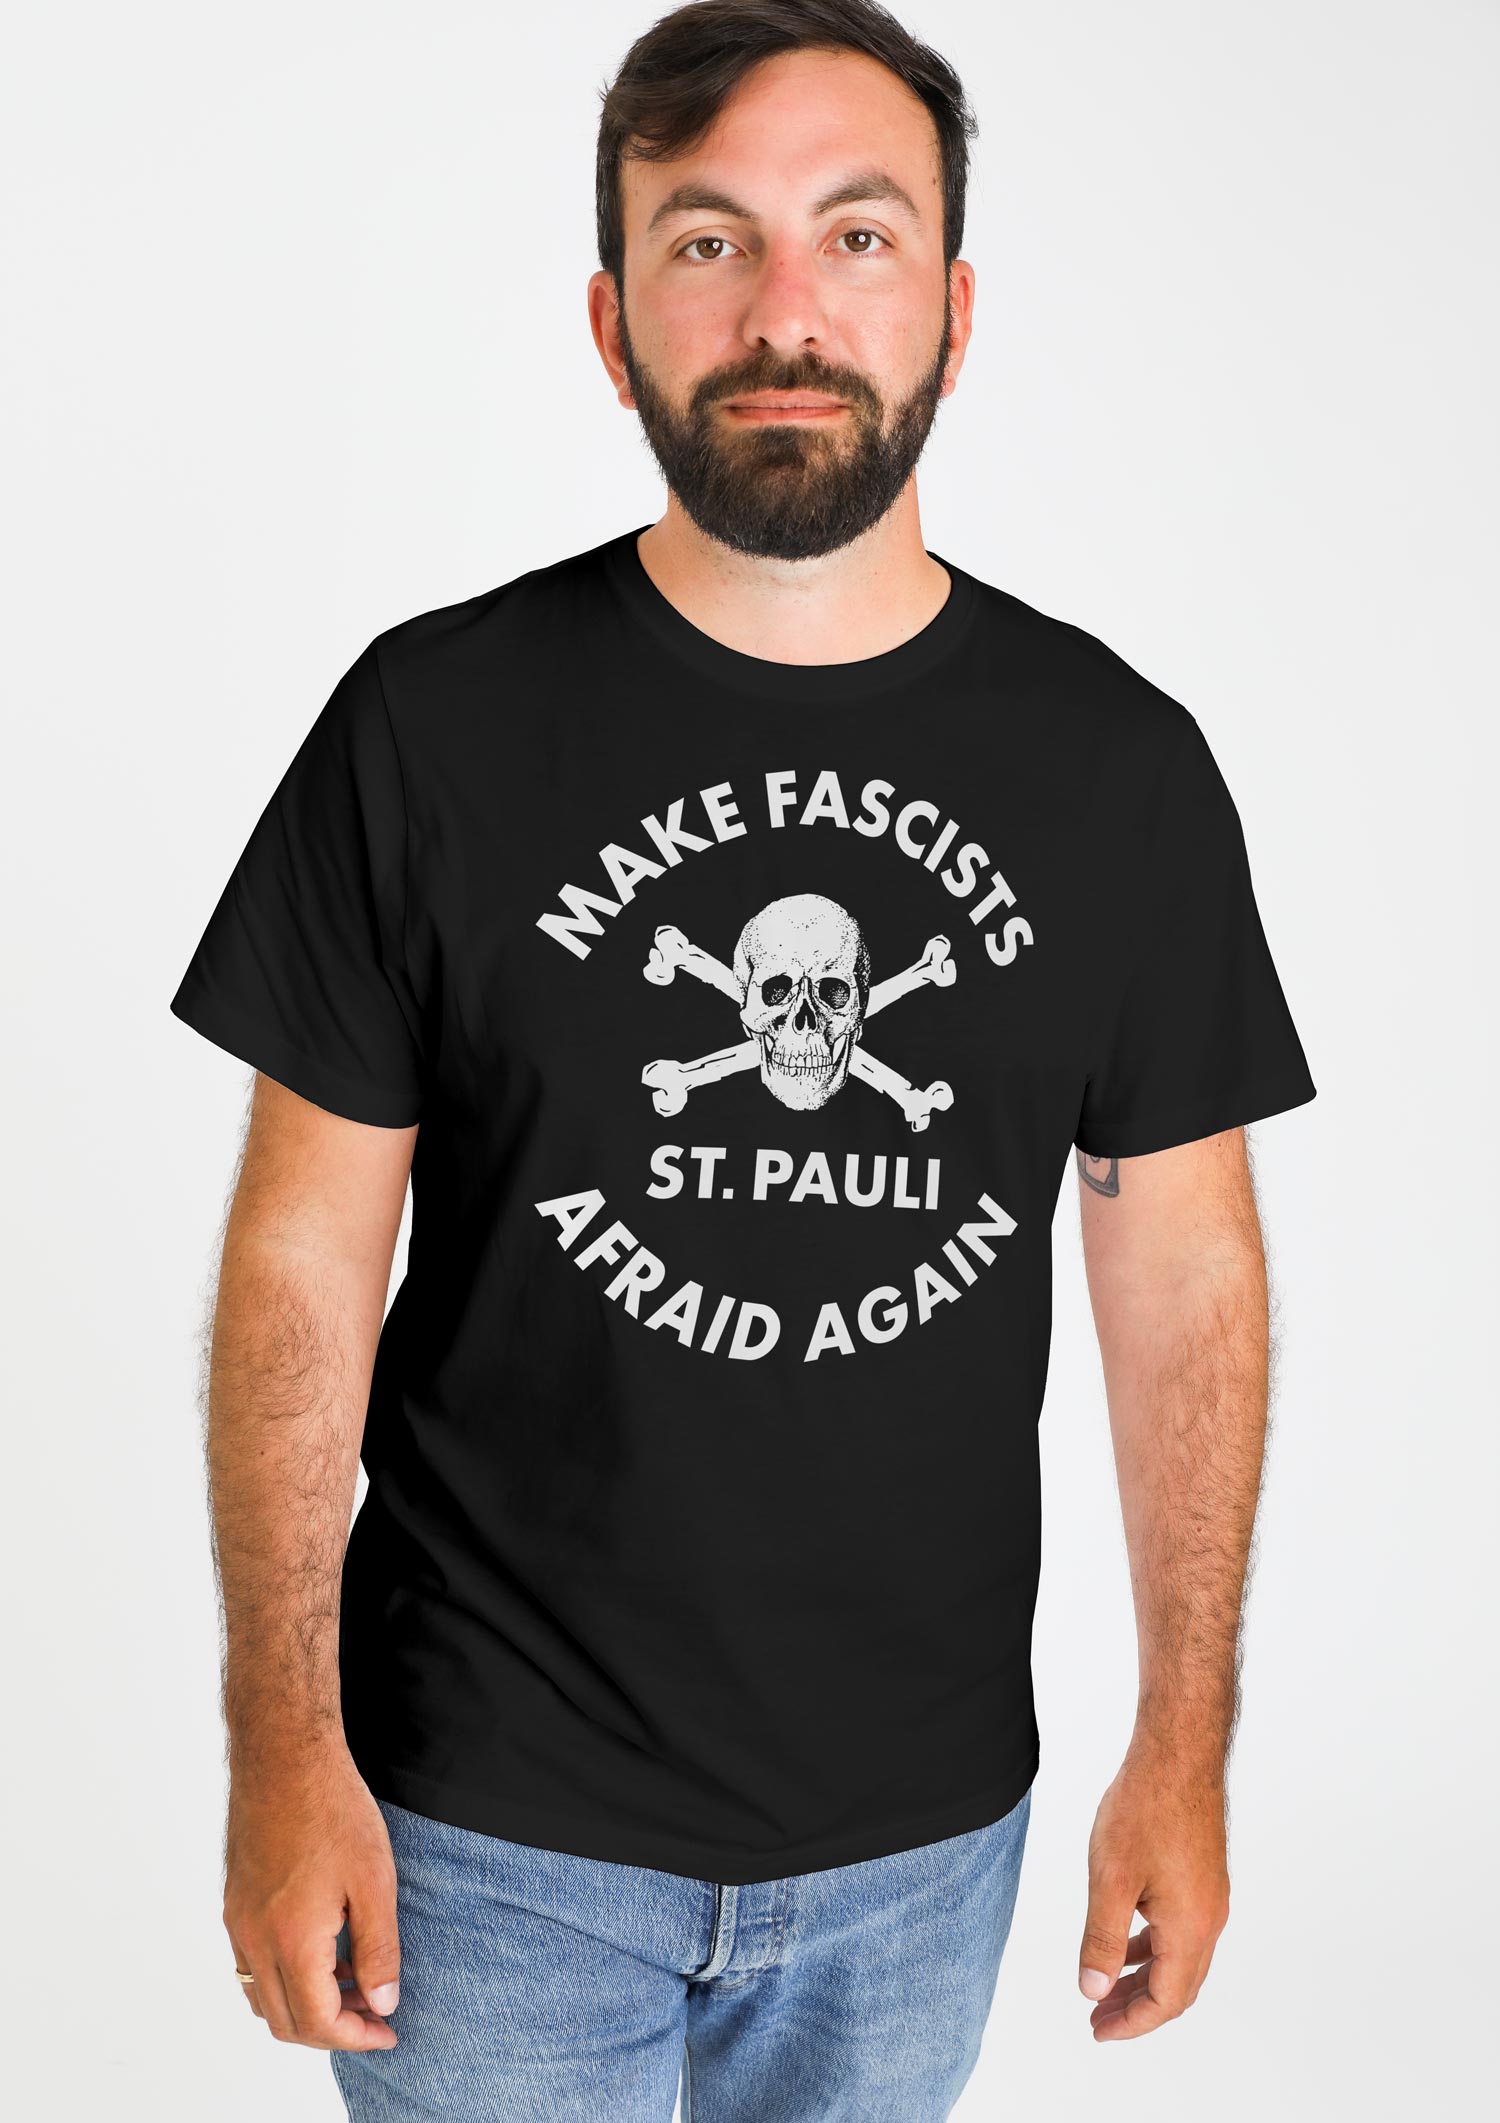 T-Shirt "Make Fascists afraid again" 